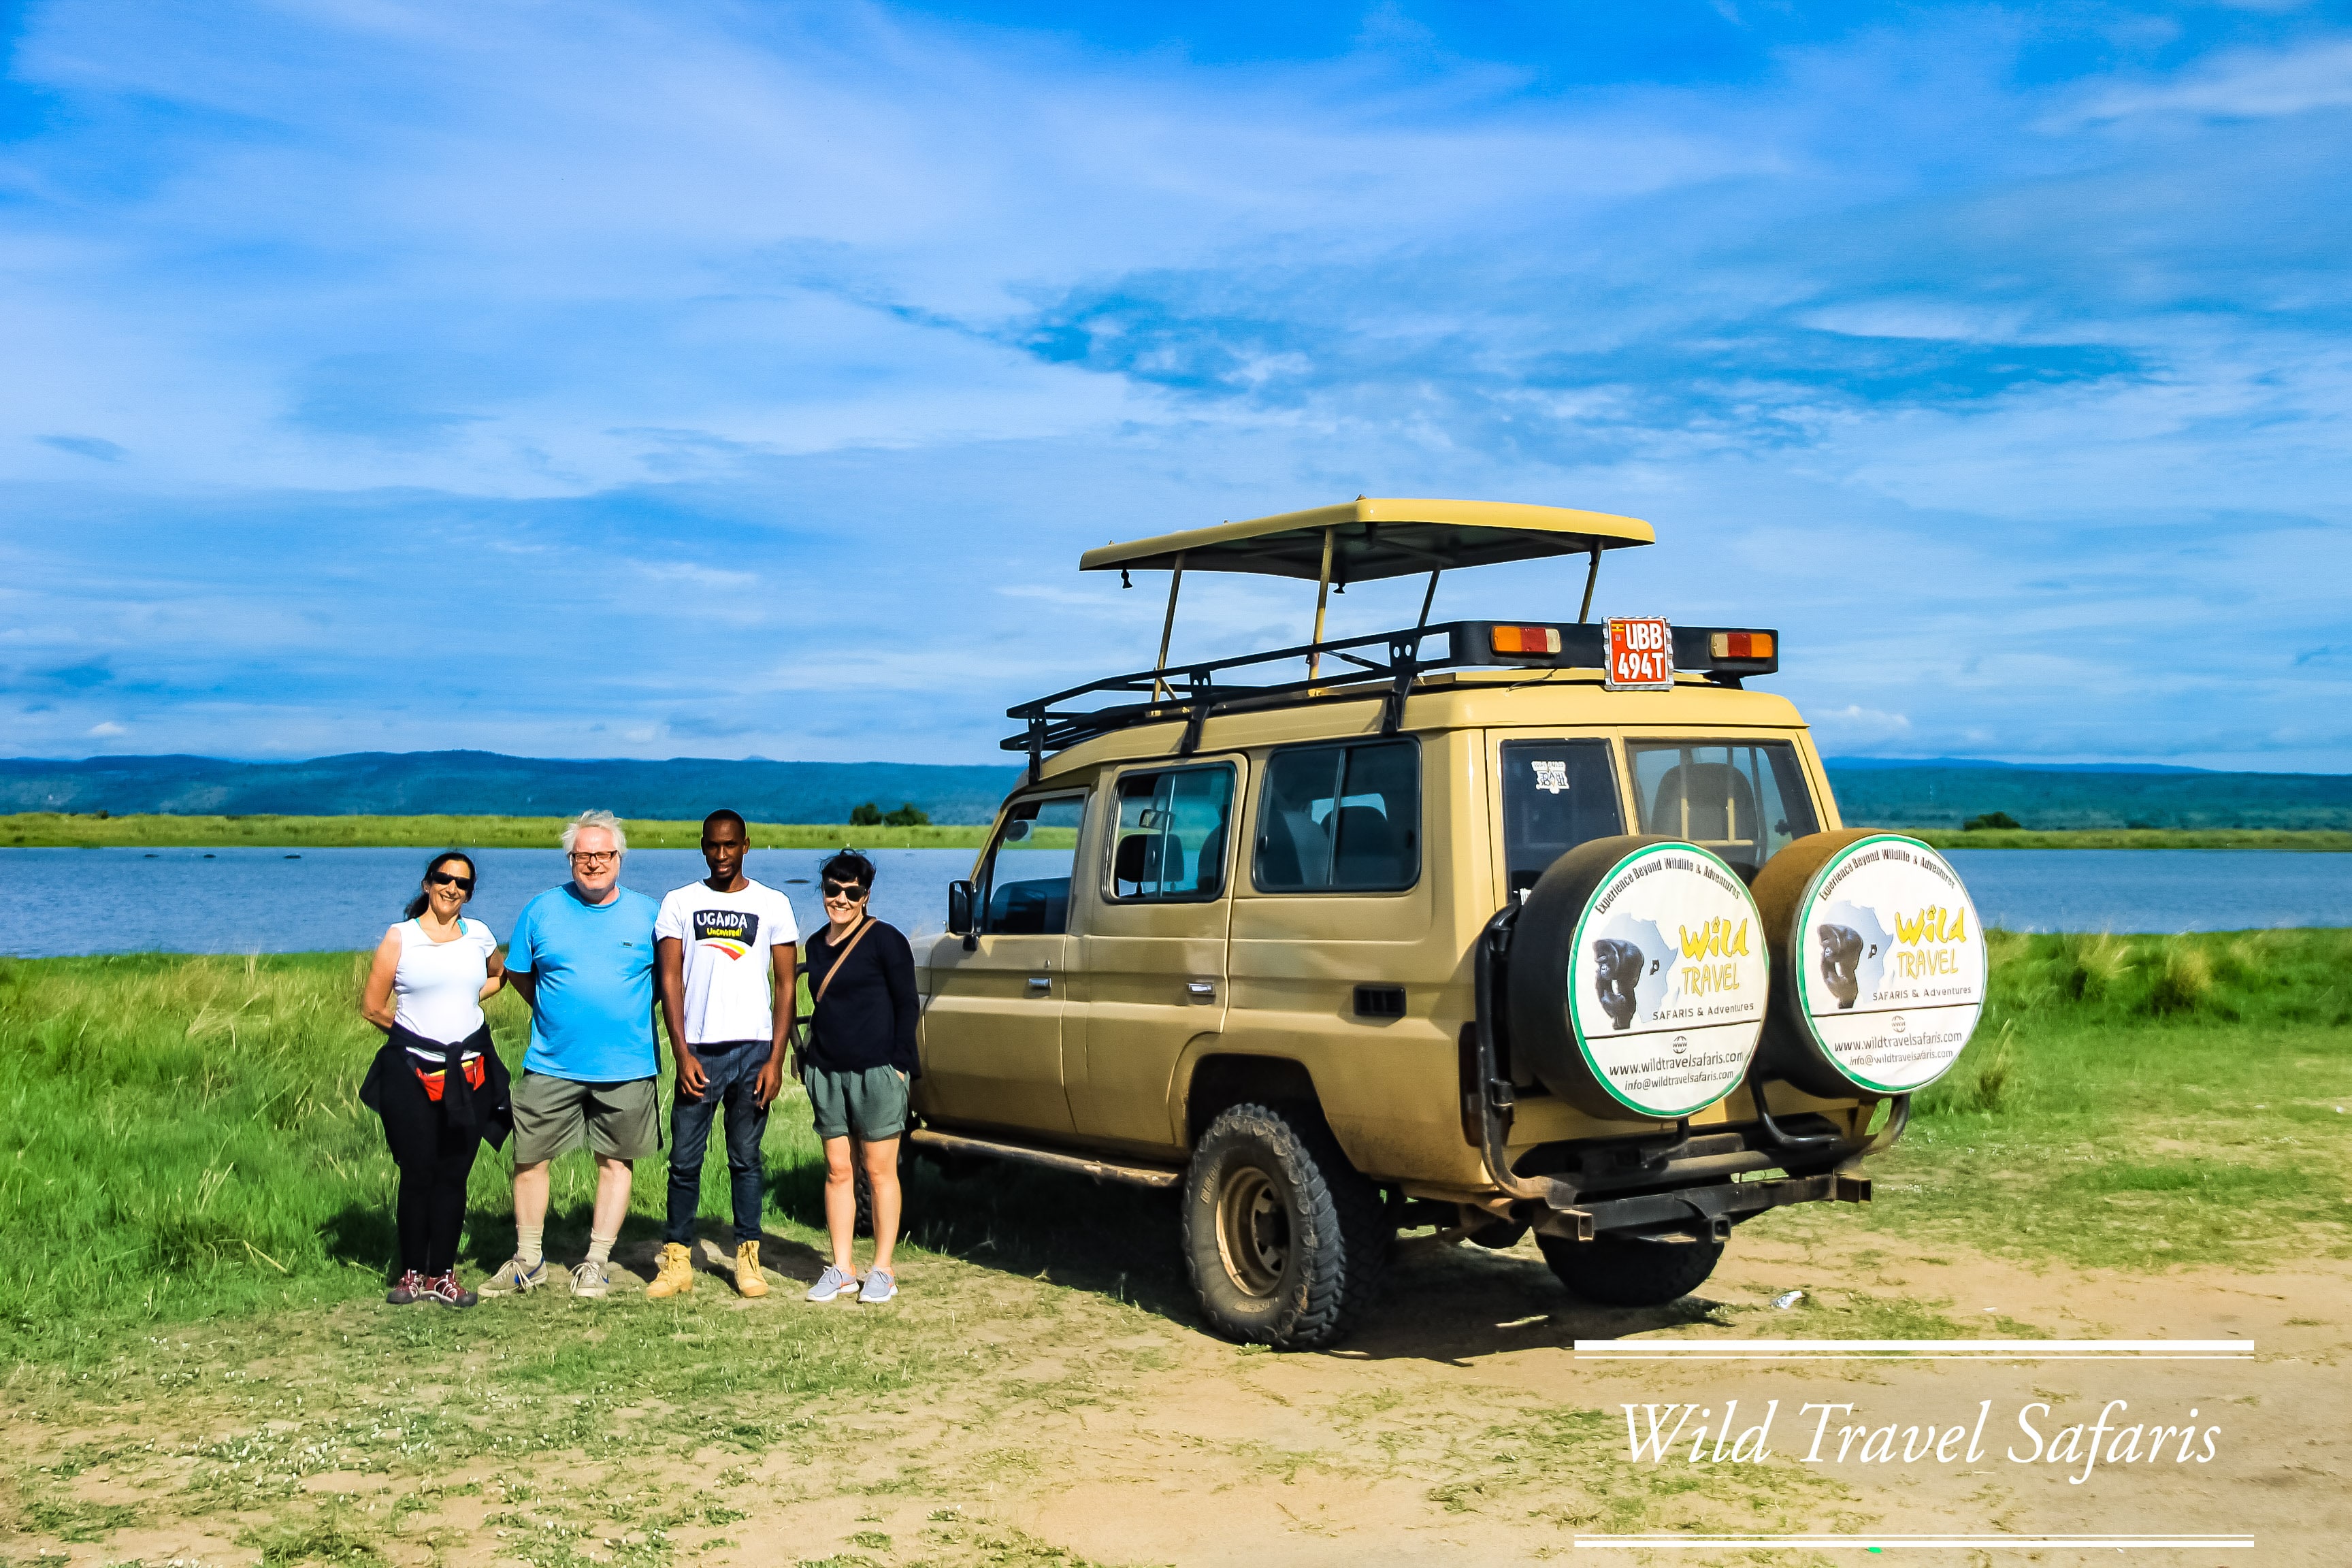 About Rinsa Wild Travel Safaris Ltd